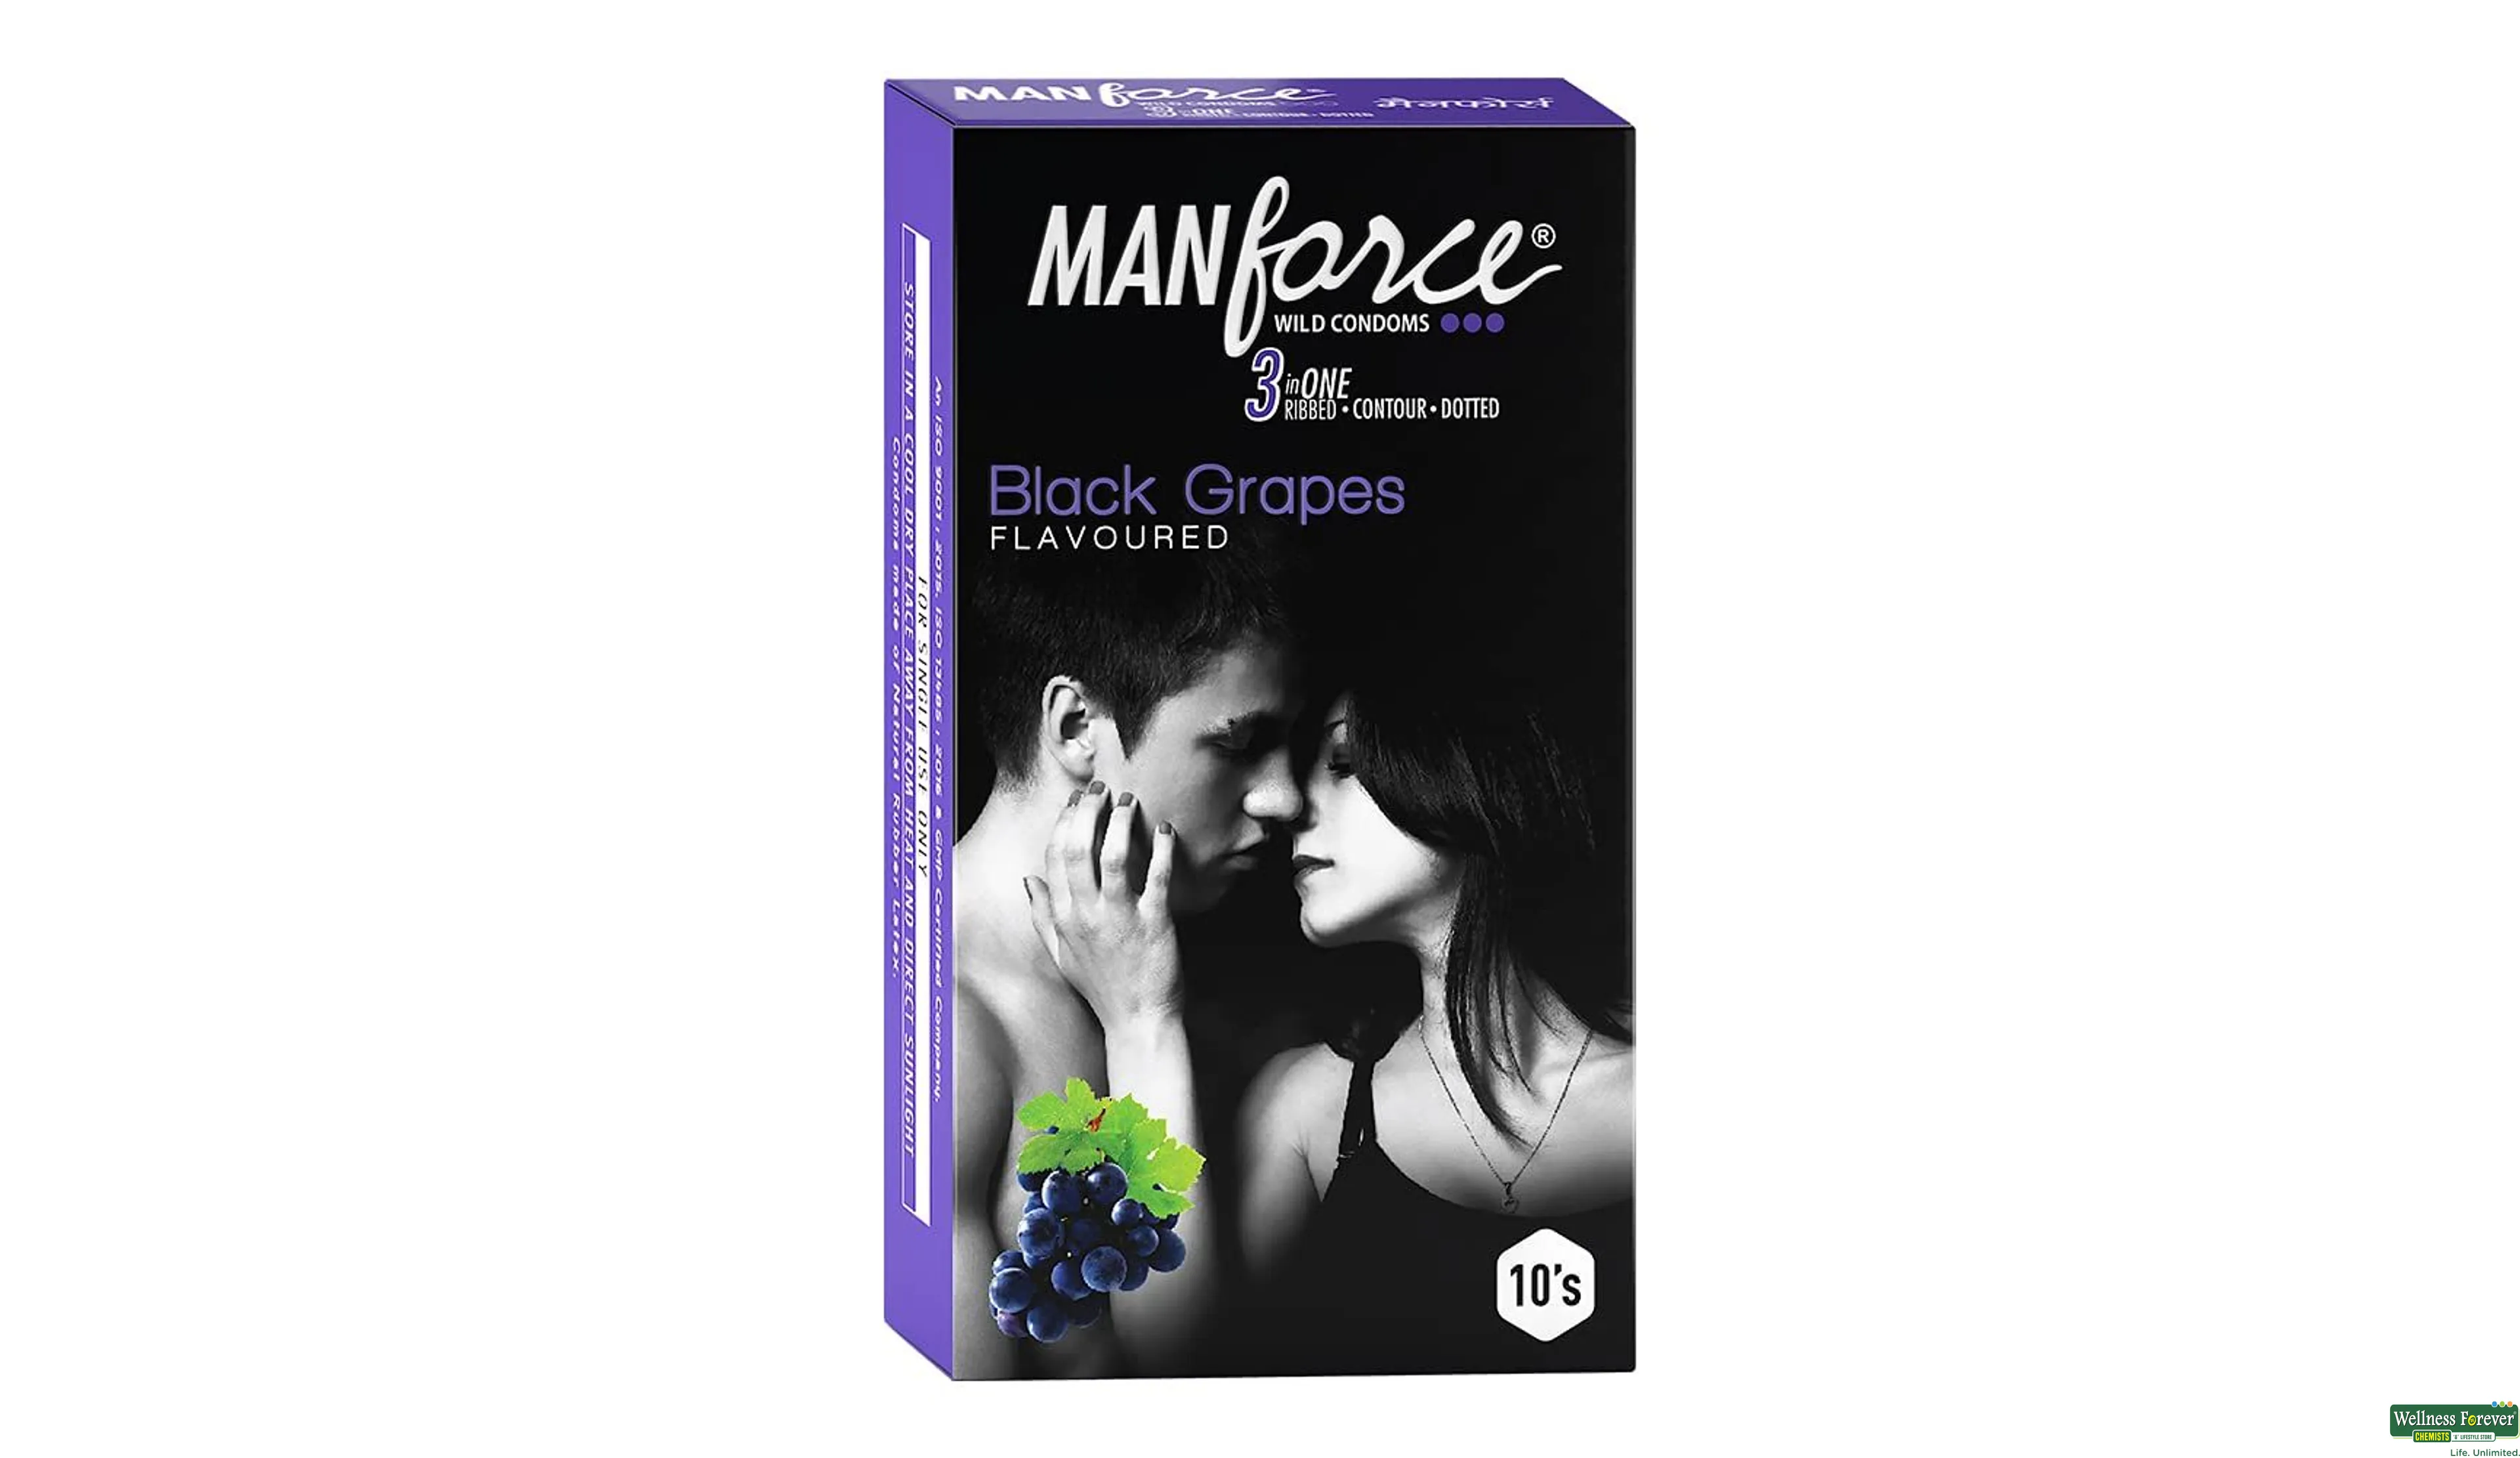 MANFORCE CONDOM BLACK GRAPES 10PC- 1, 10PC, 